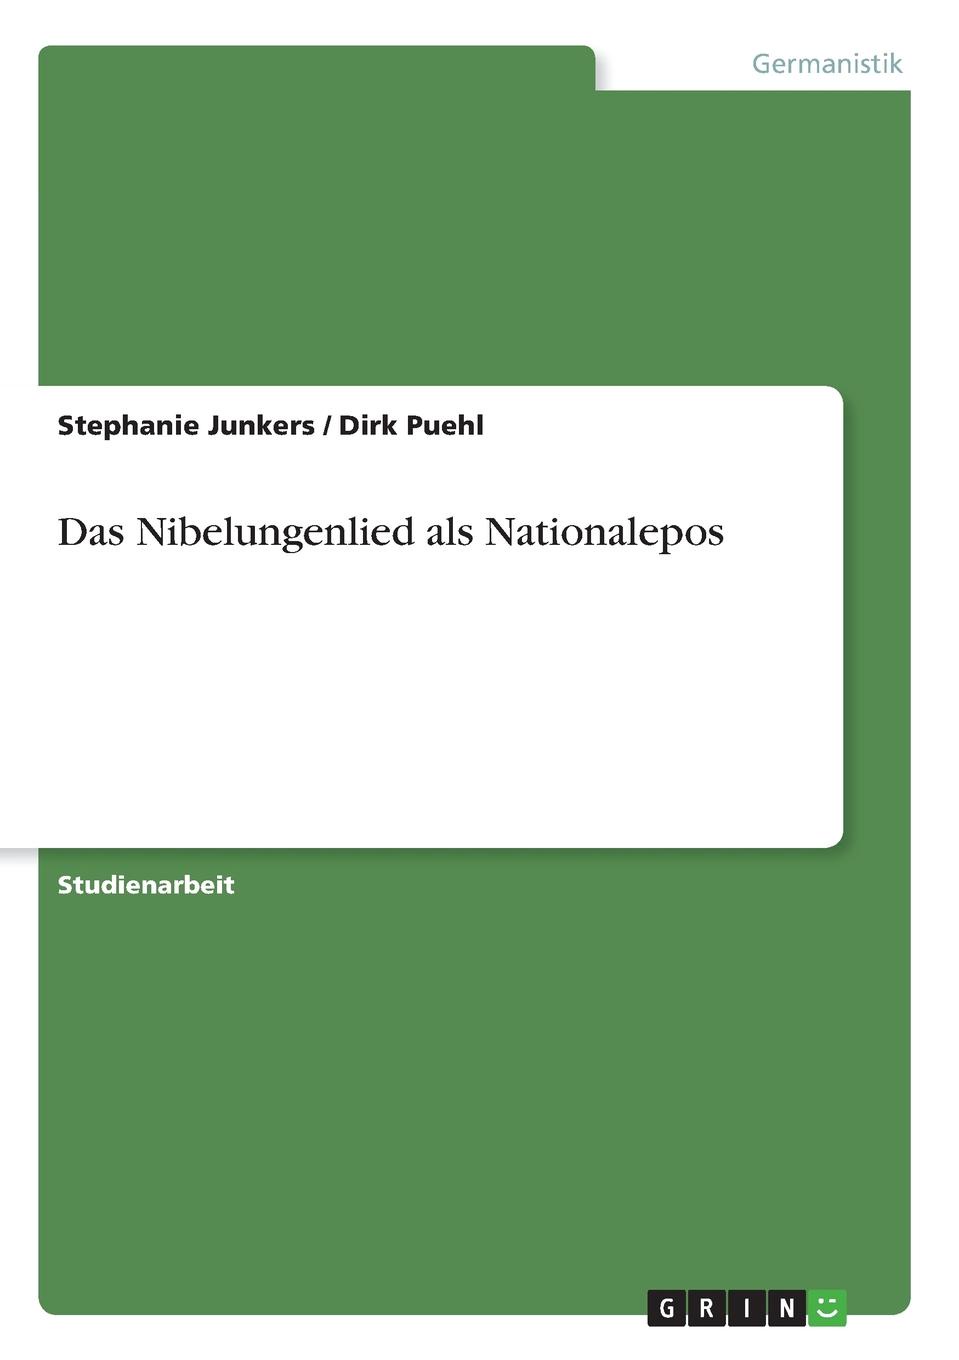 Das Nibelungenlied als Nationalepos